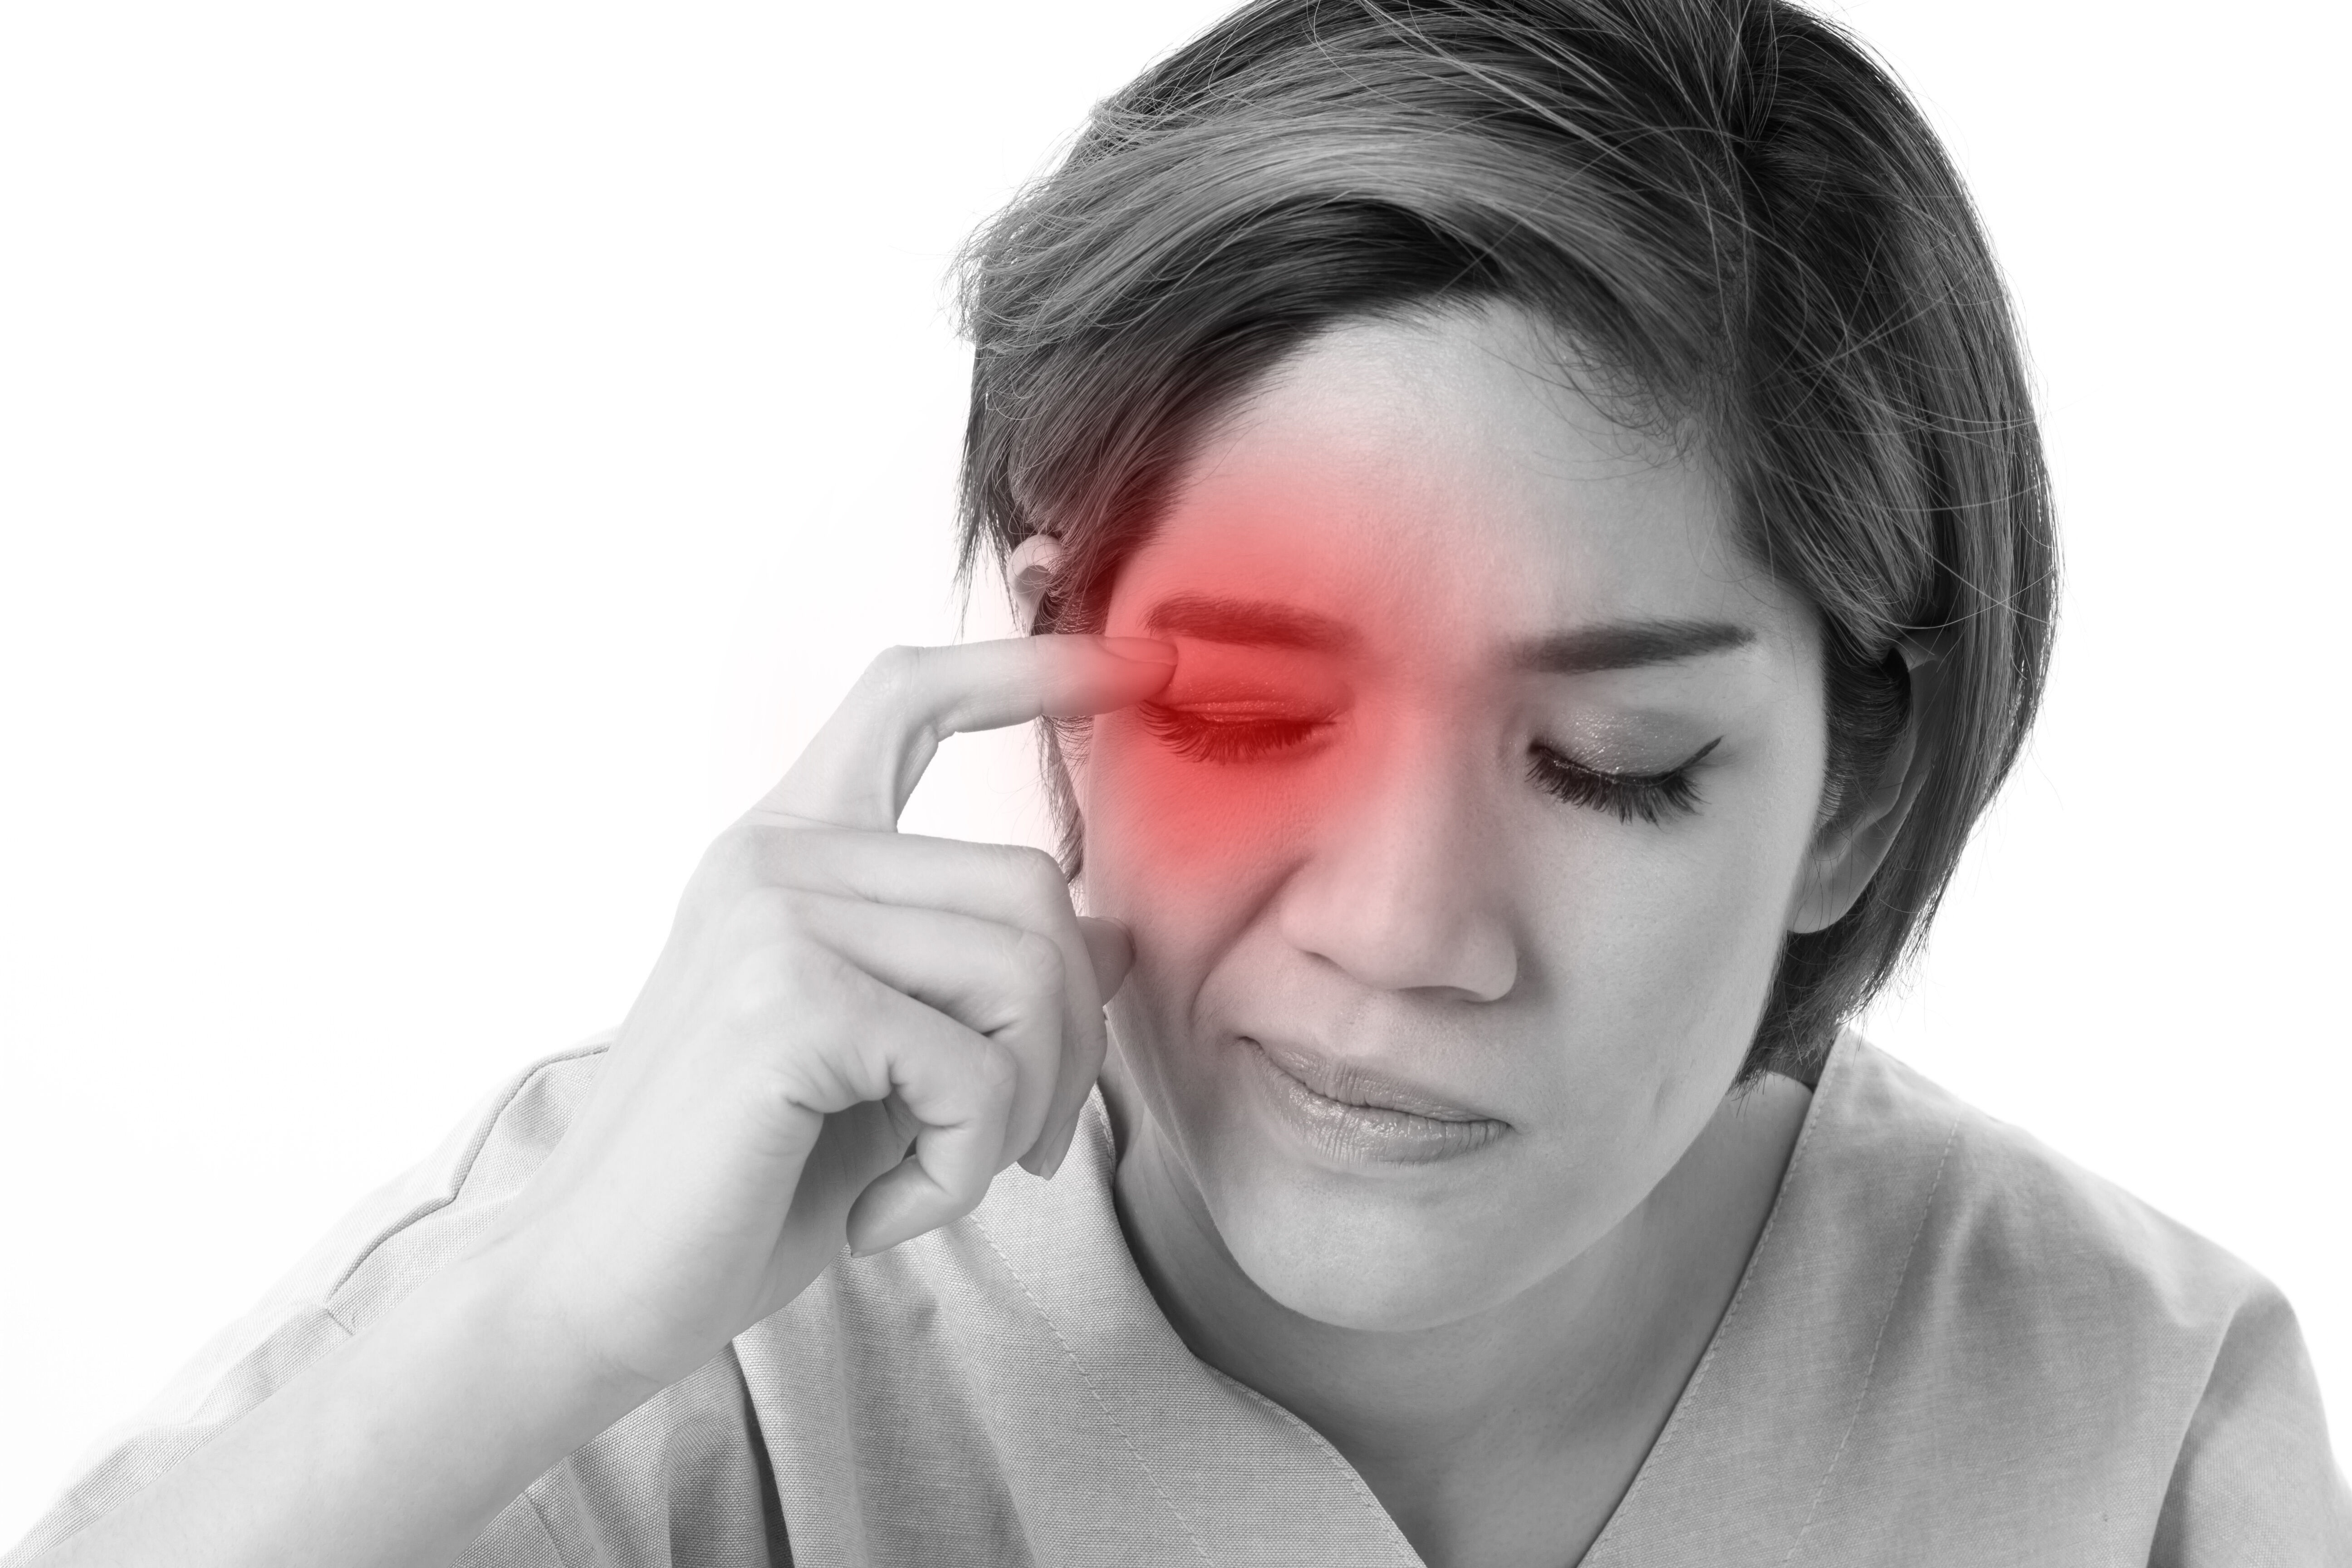 Can eye pain be a symptom of coronavirus